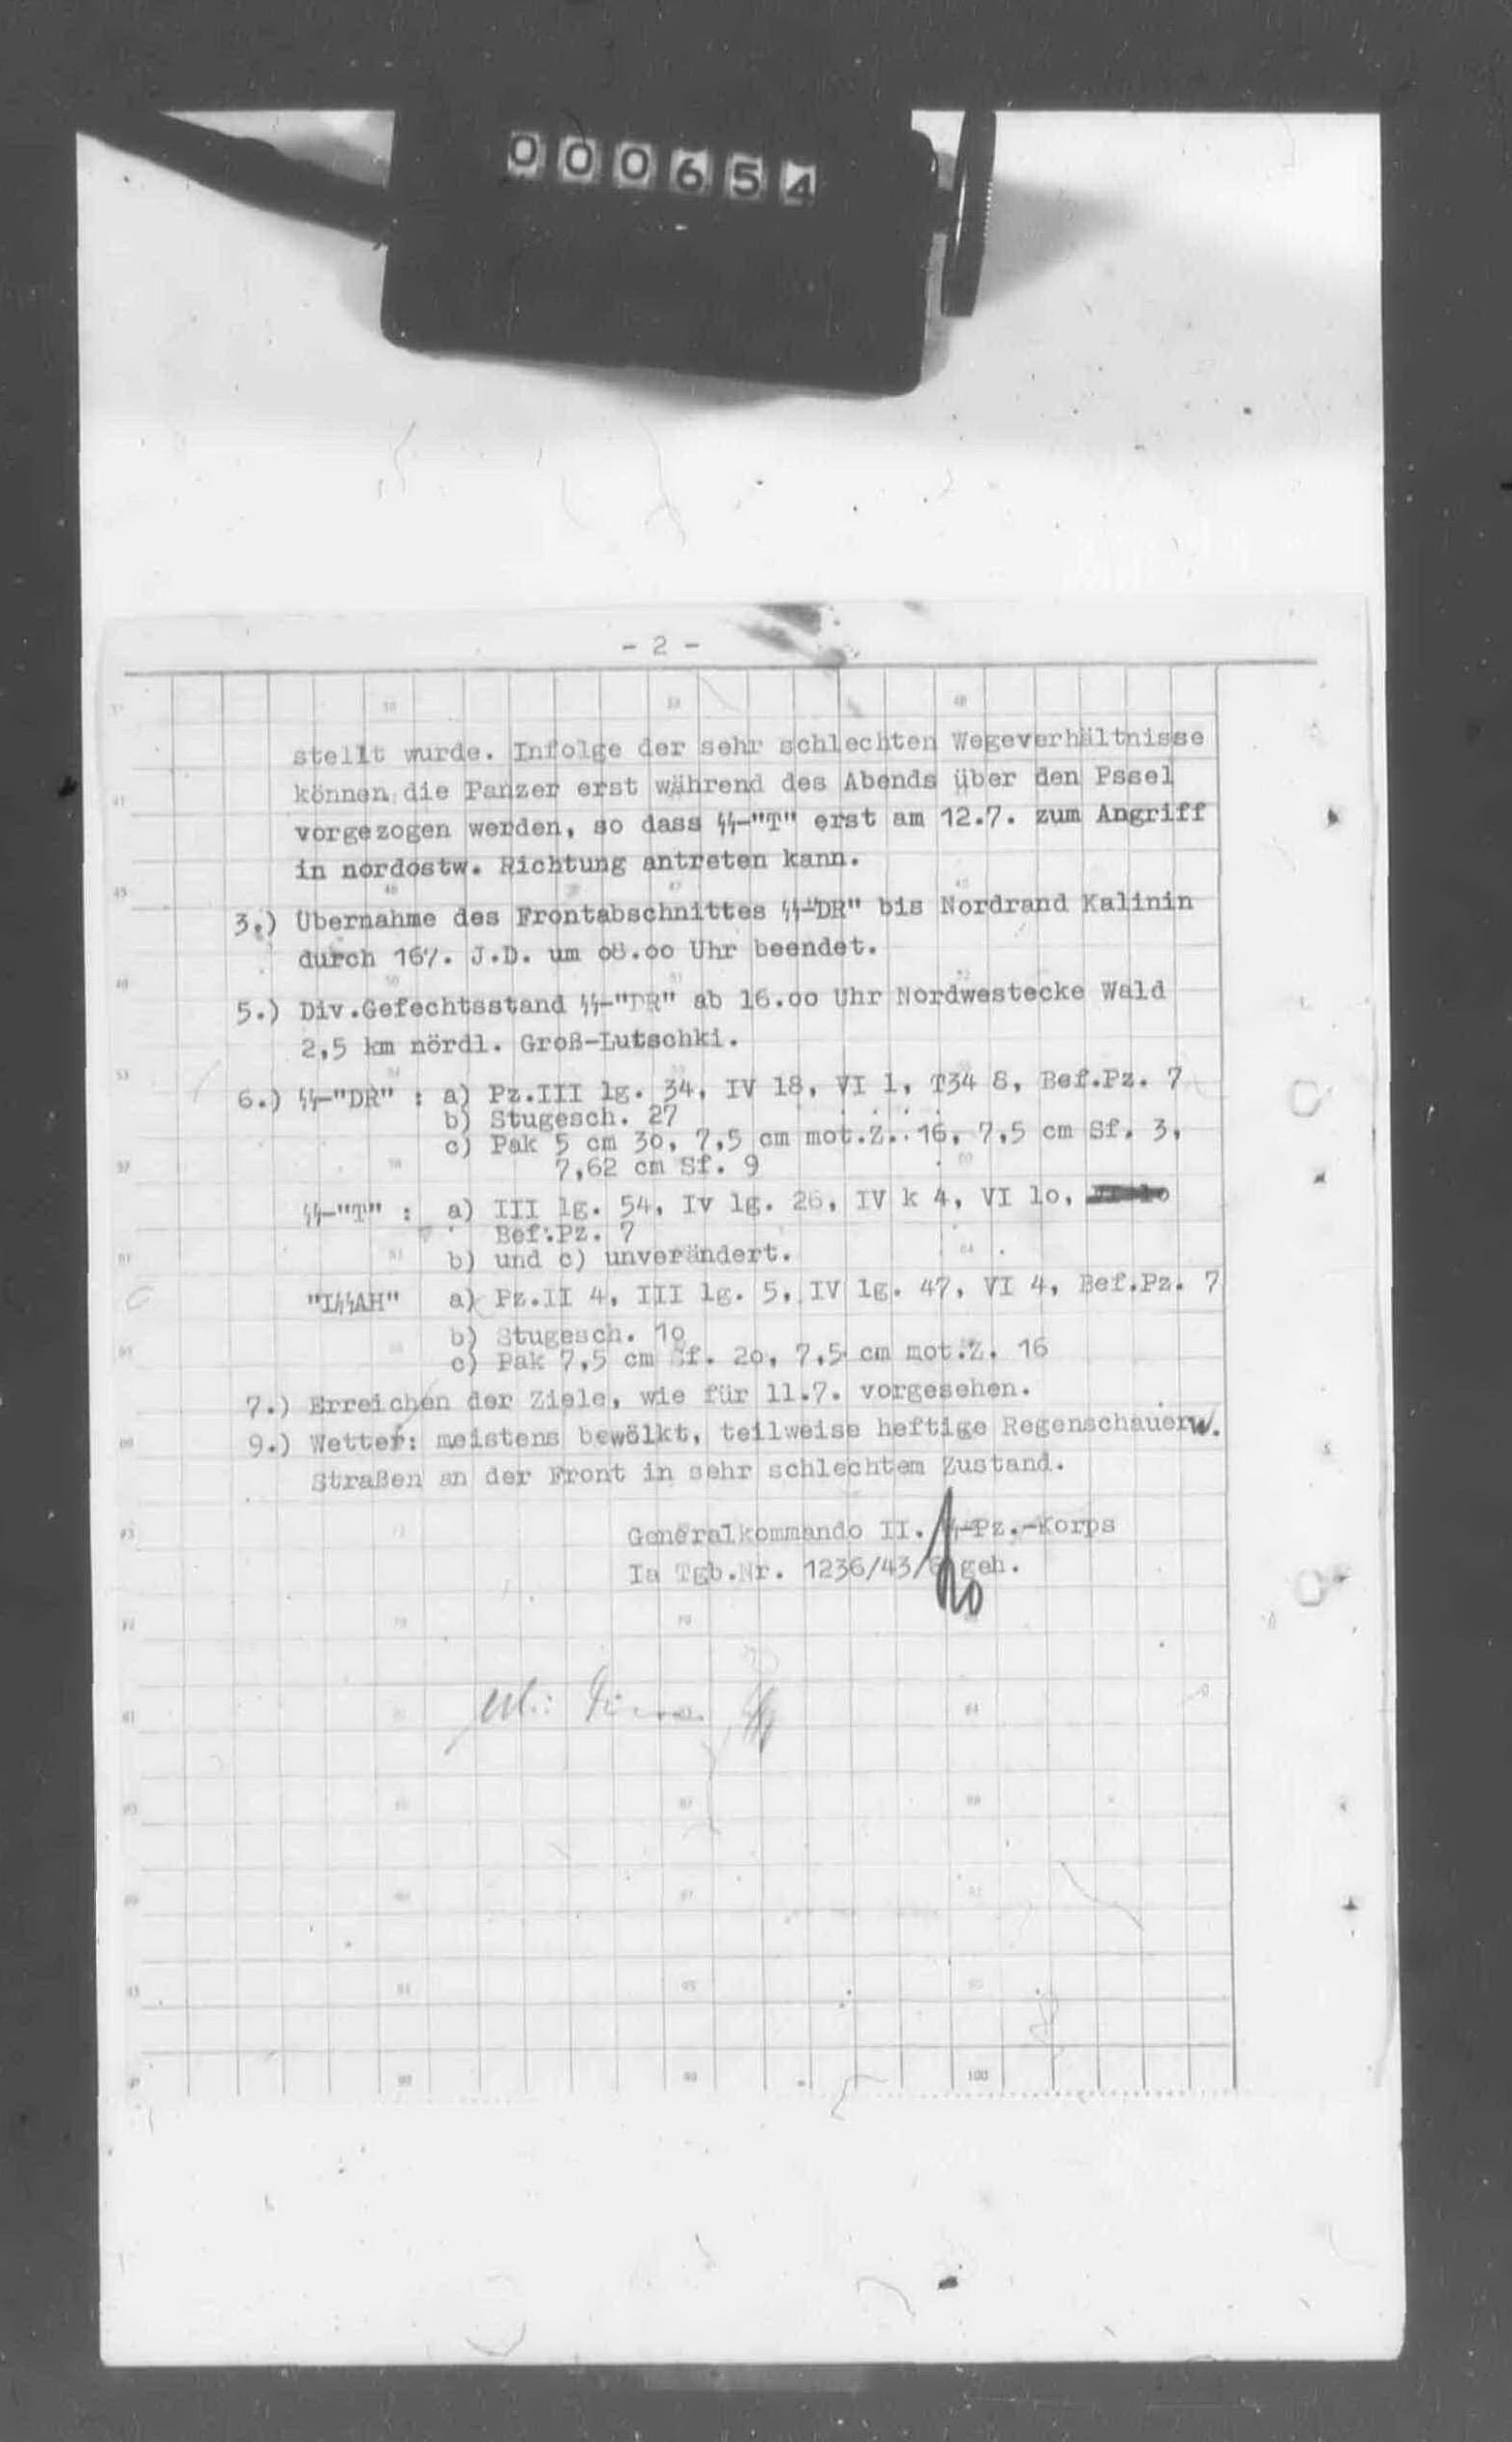 II. SS-Panzerkorps: Tagesmeldung vom 11.7.1943 - Page 2